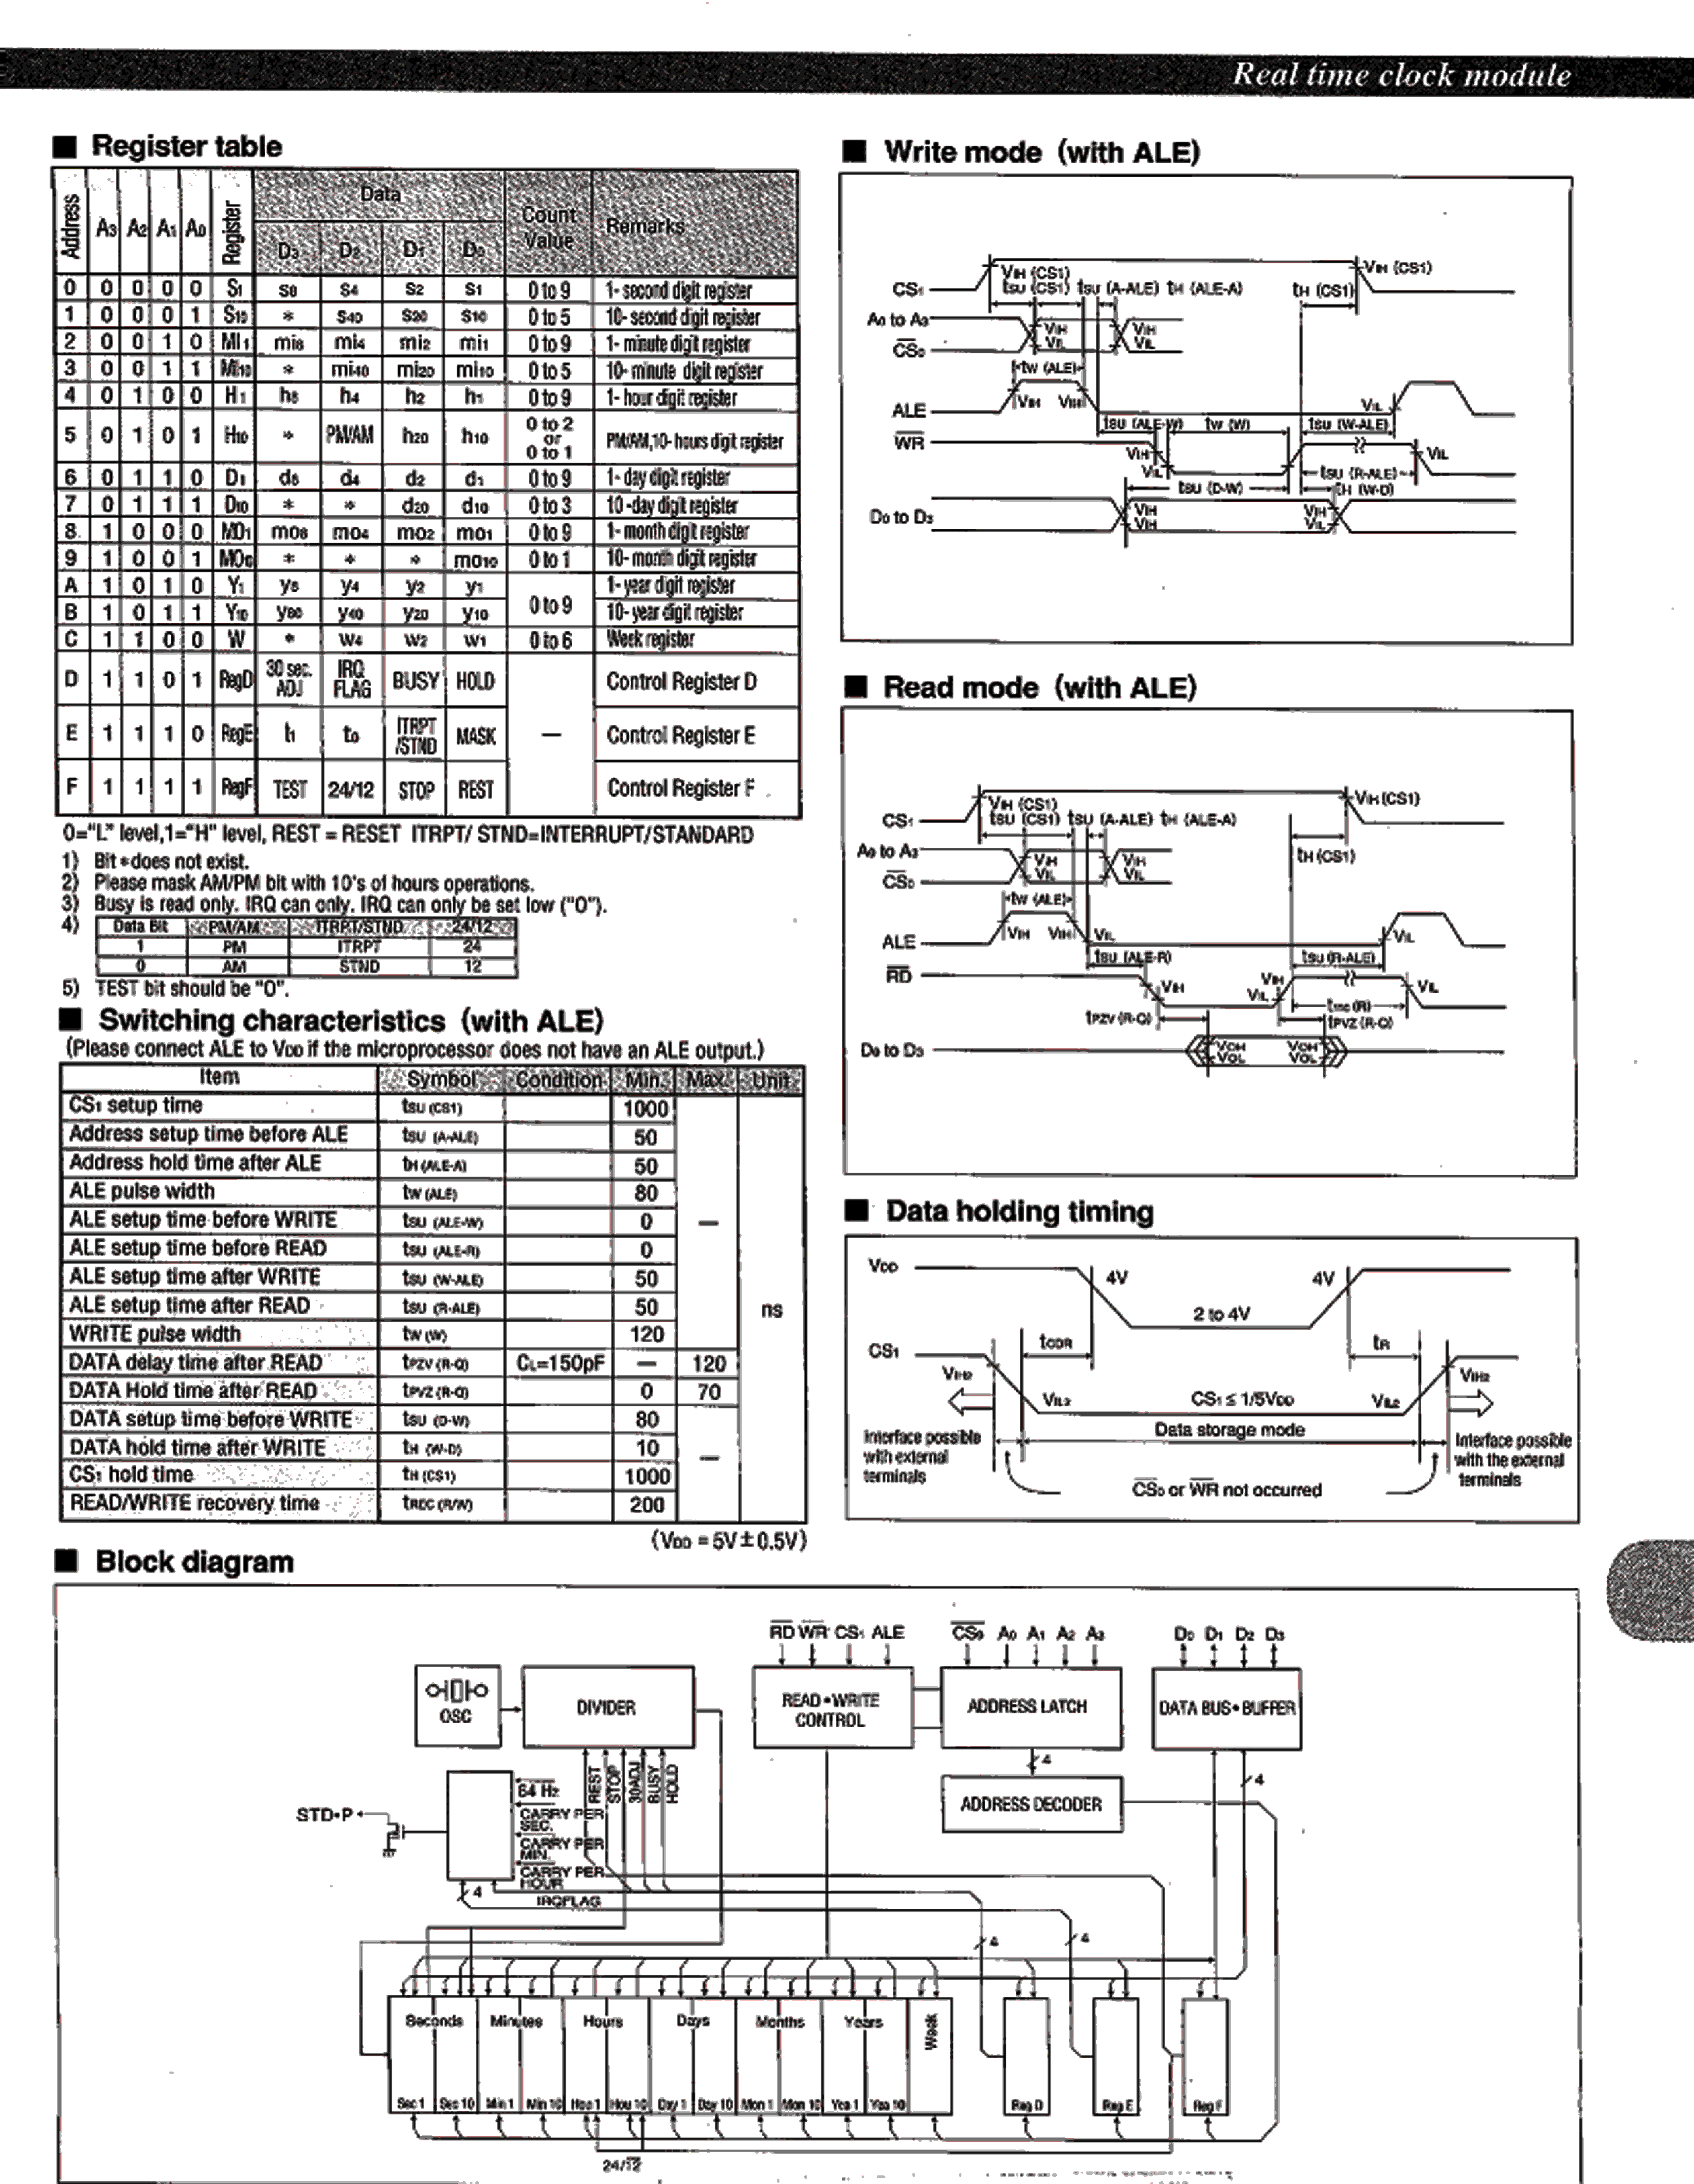 Datasheet RTC-72423 - Real time clock module(4-bit REAL TIME CLOCK MODULE) page 2